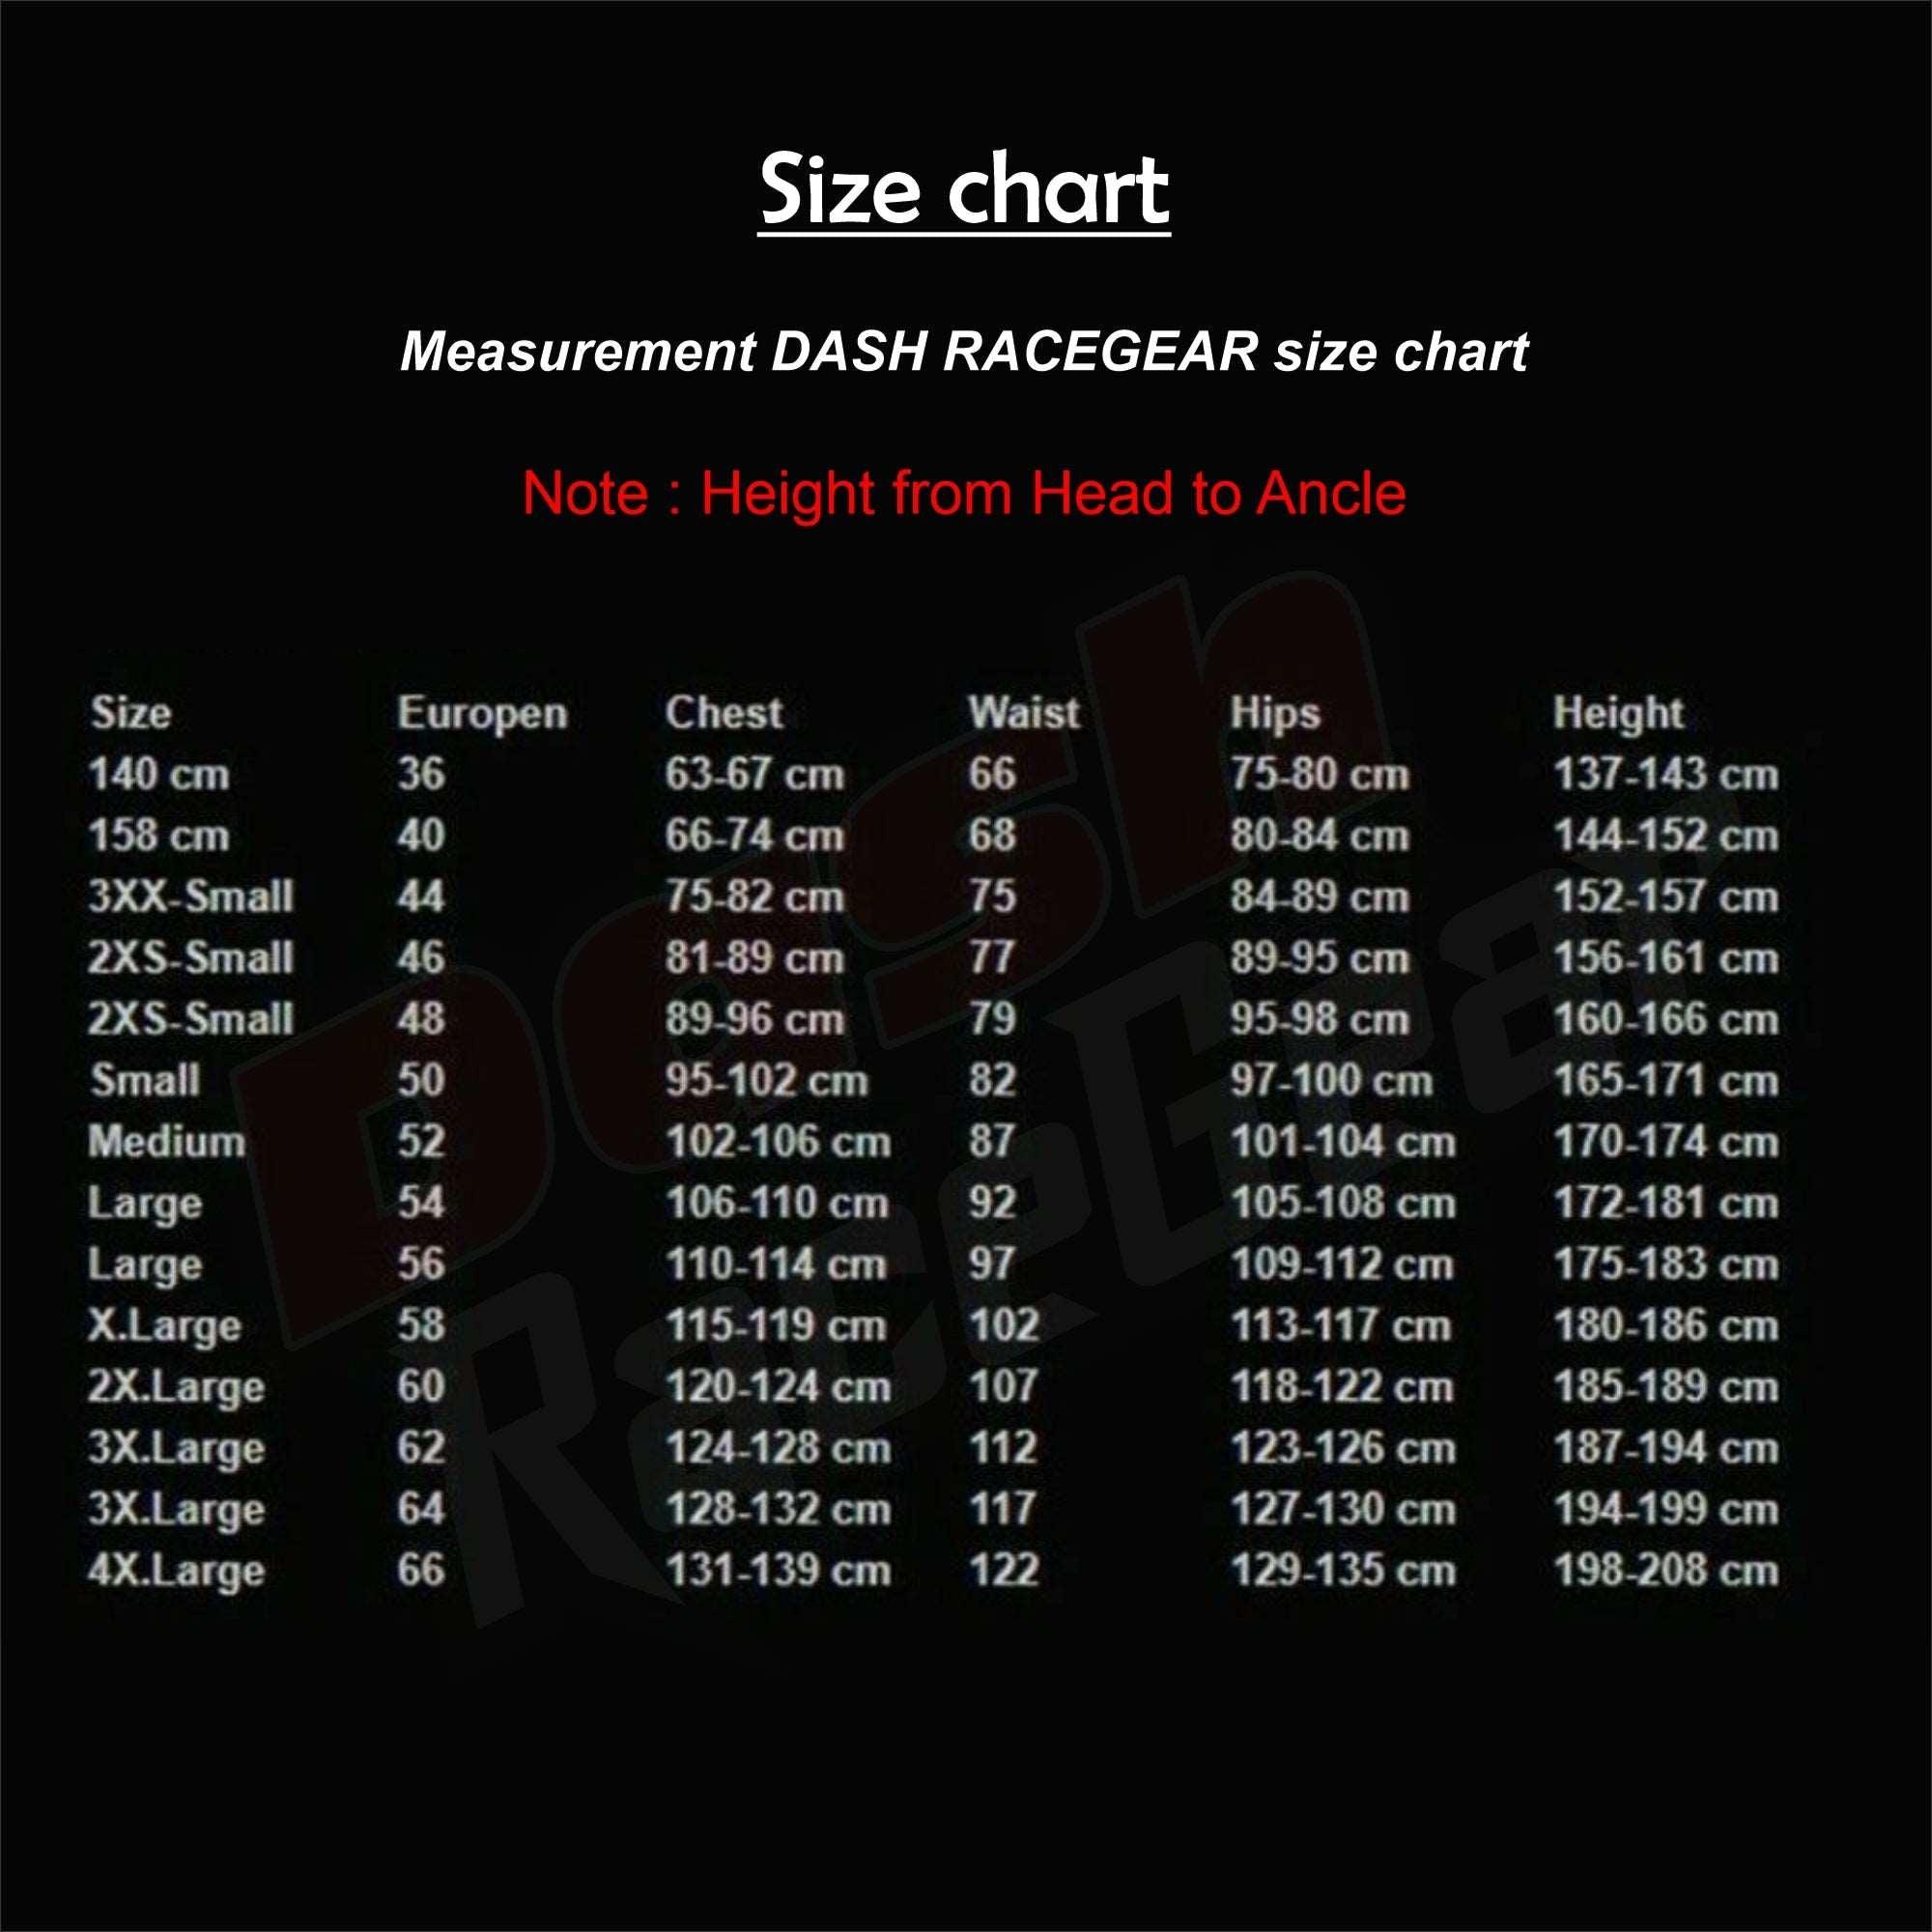 Daniel Ricciardo Renault 2020 Race Suit DASH RACEGEAR